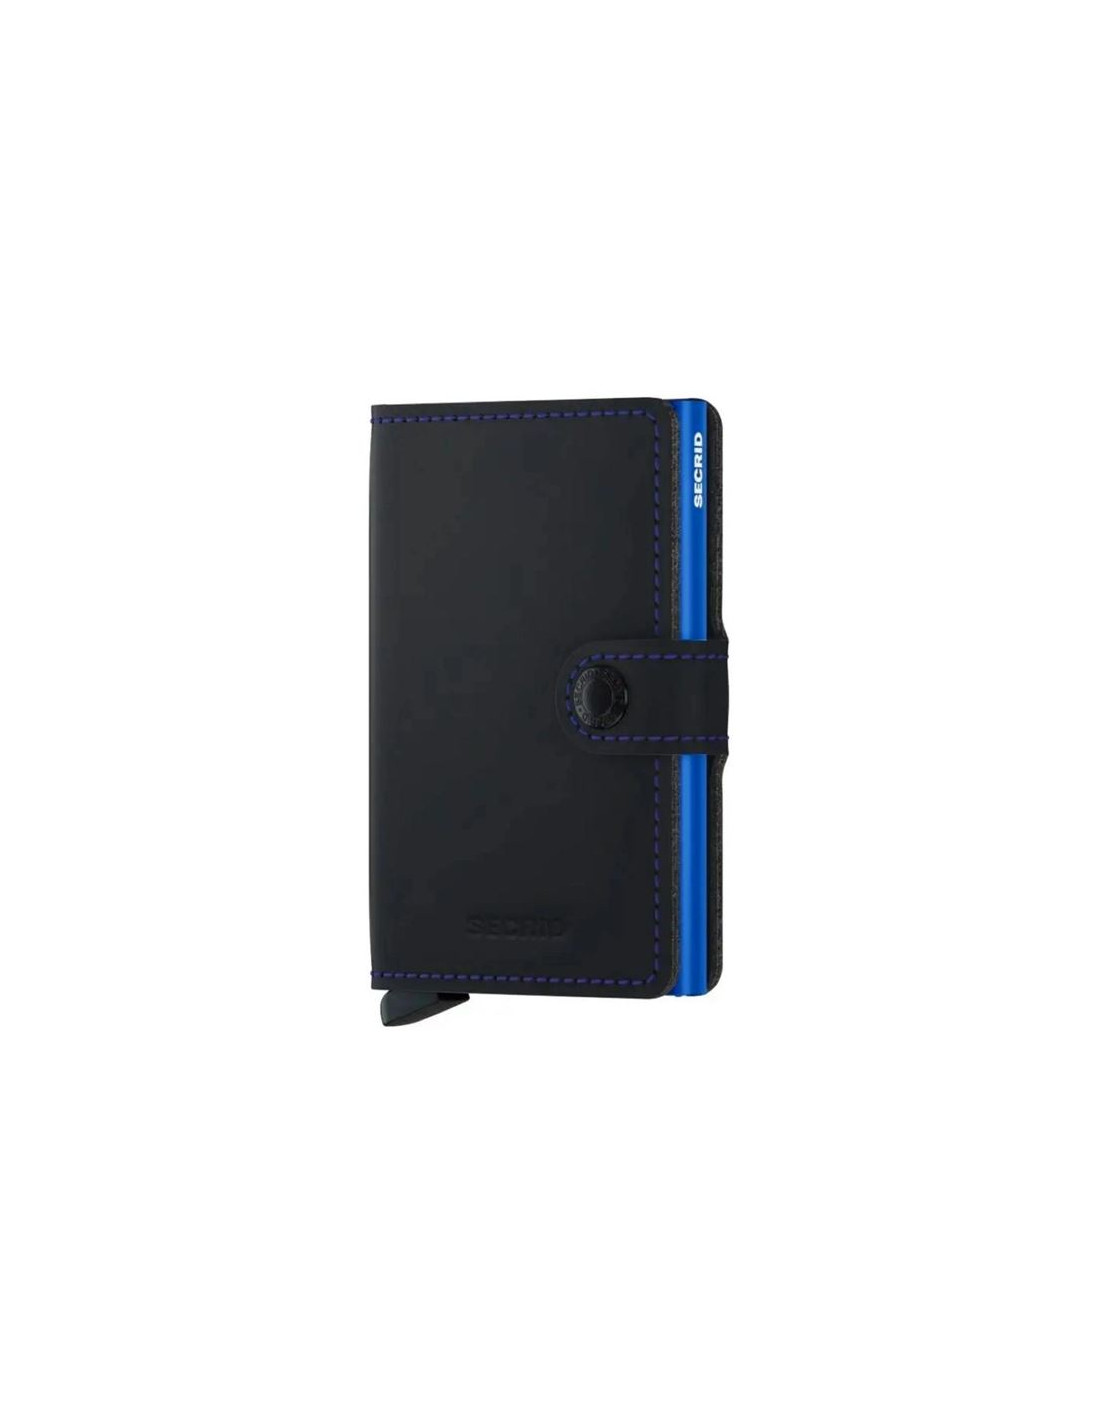 Cartera secrid miniwallet matte black & blue product